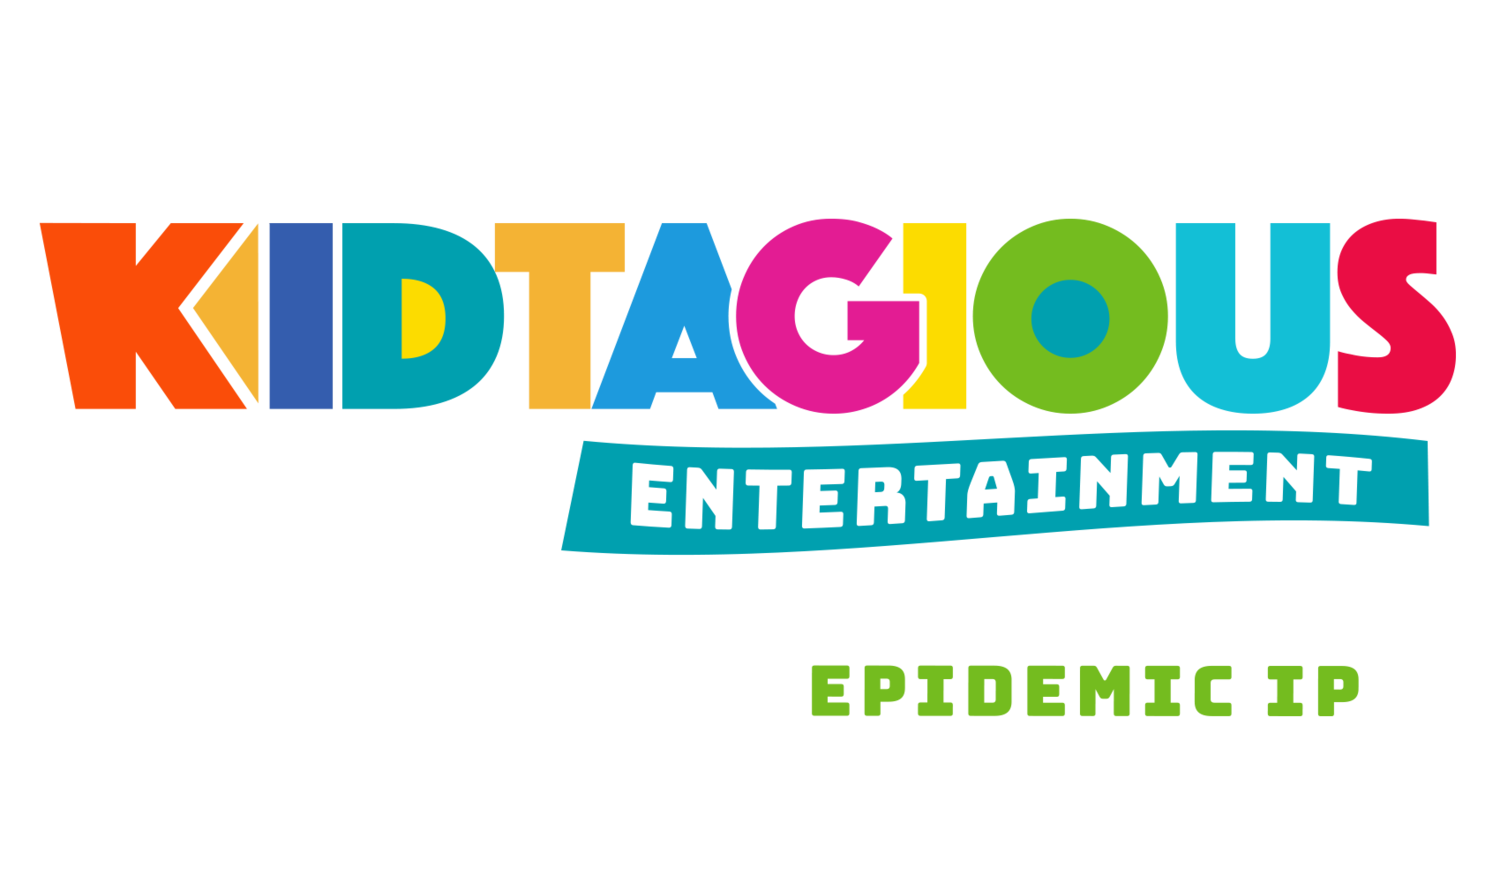 Kidtagious Entertainment